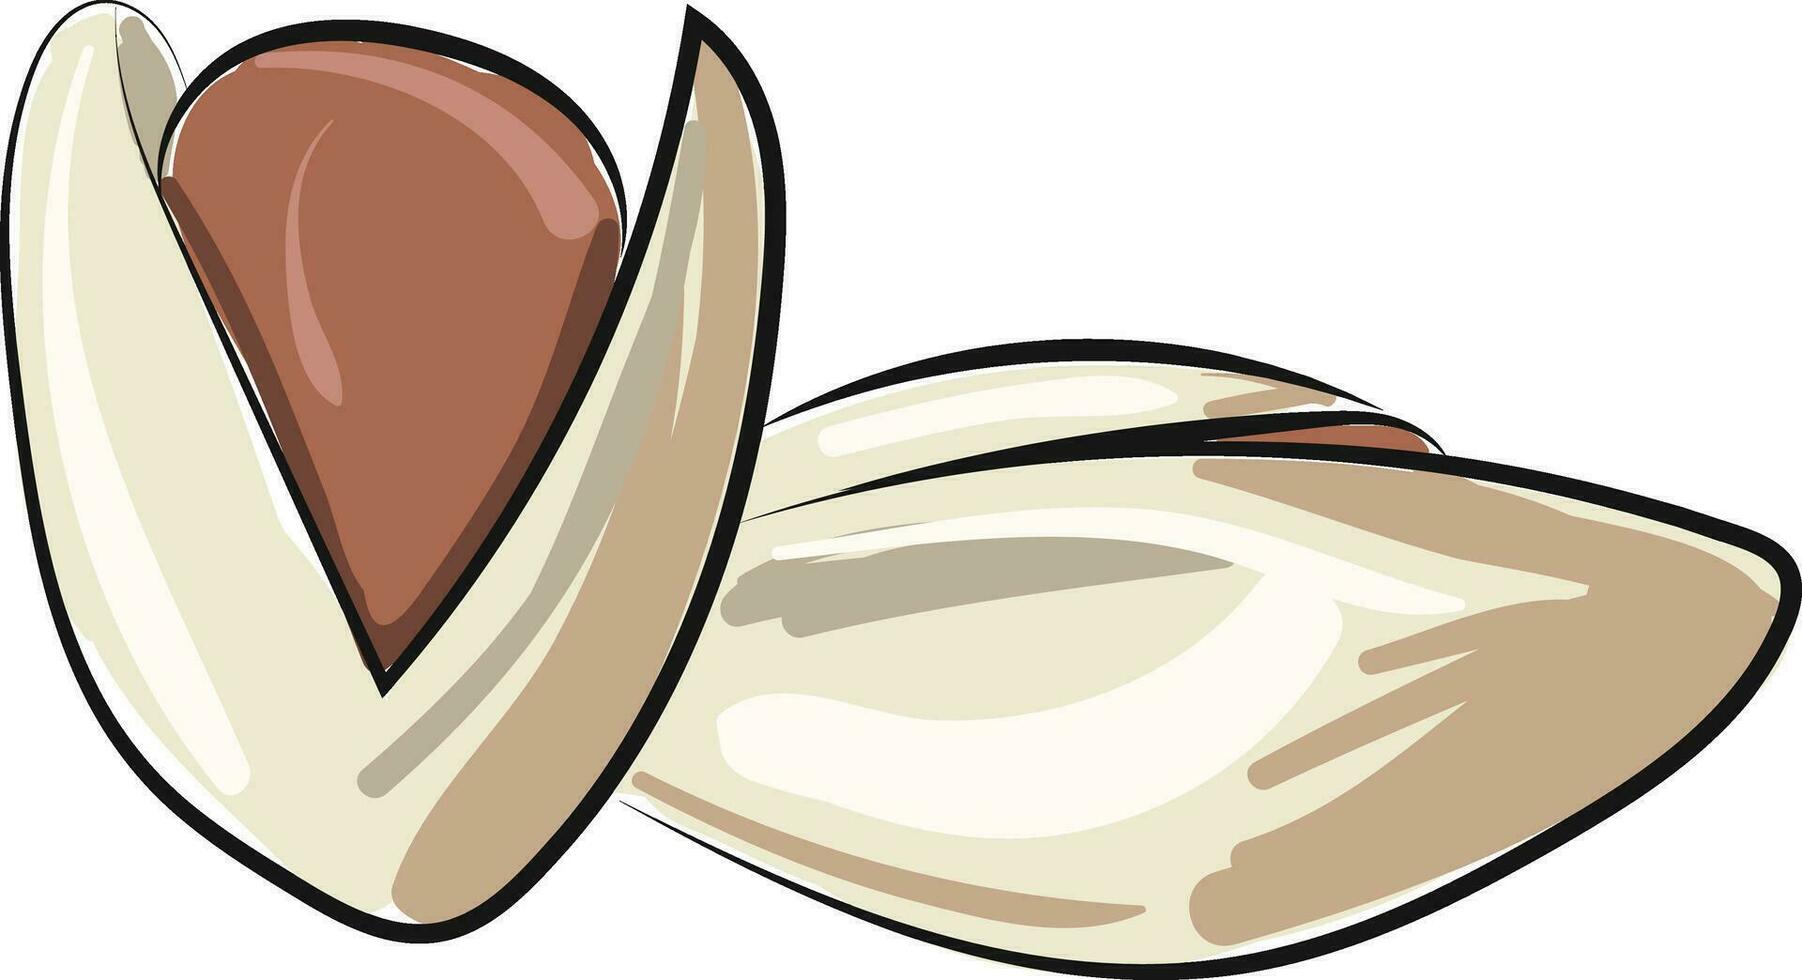 Erdnüsse im Hülse, Vektor oder Farbe Illustration.